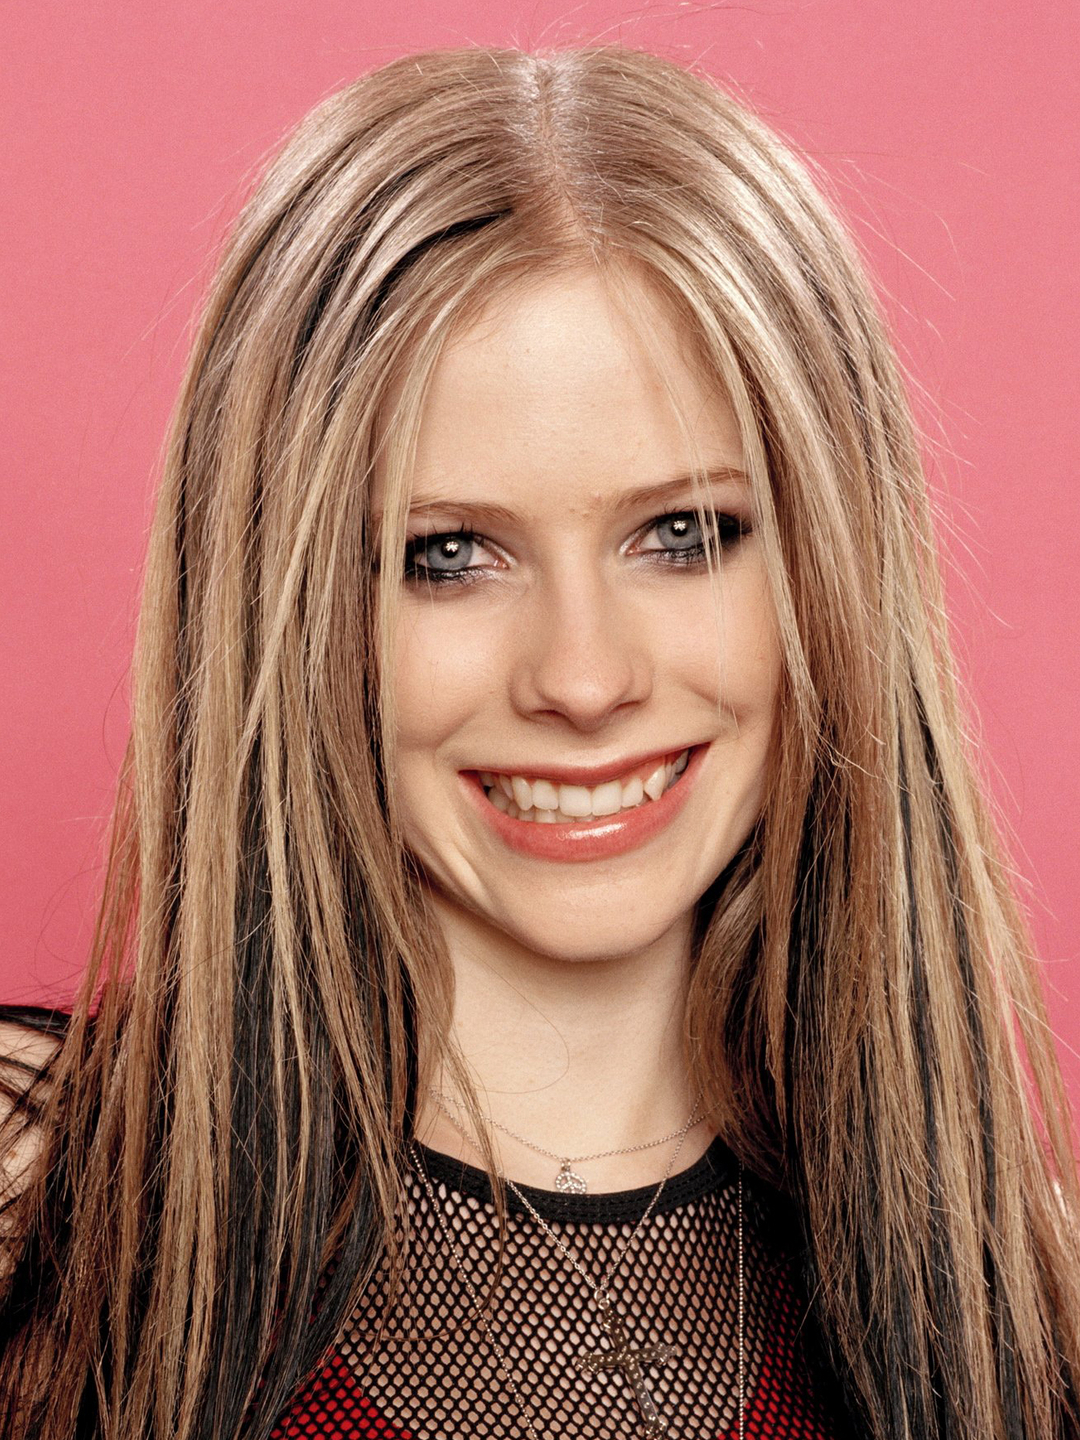 Avril Lavigne young age